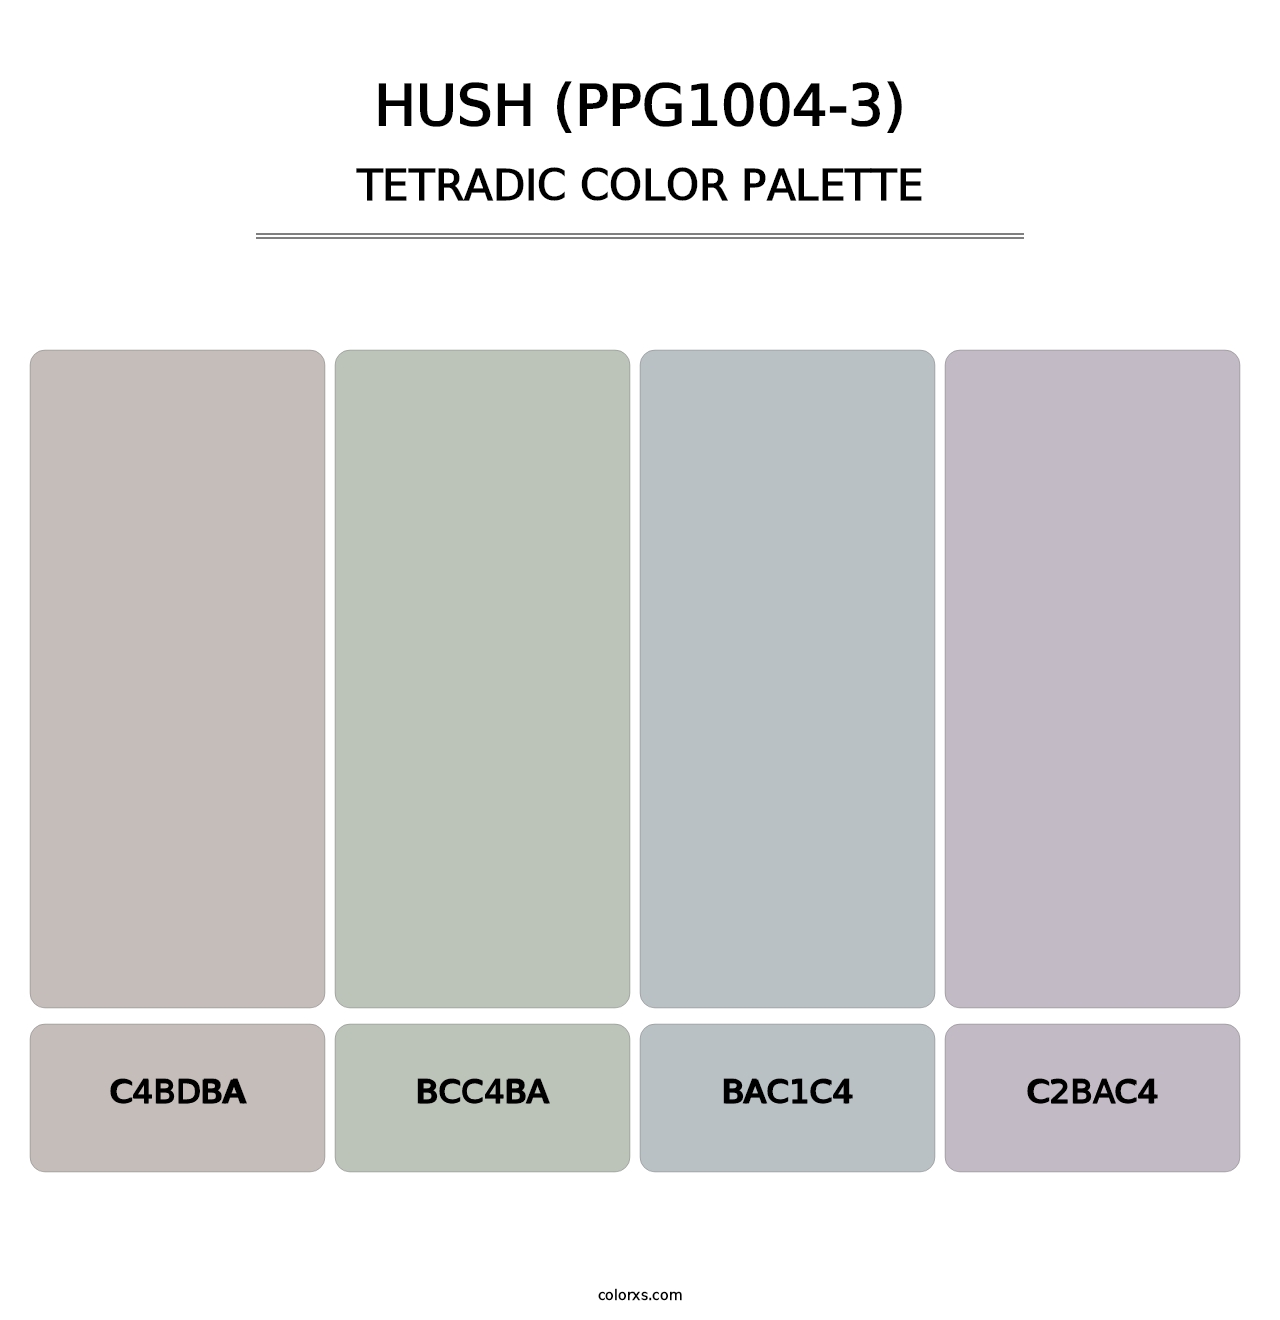 Hush (PPG1004-3) - Tetradic Color Palette